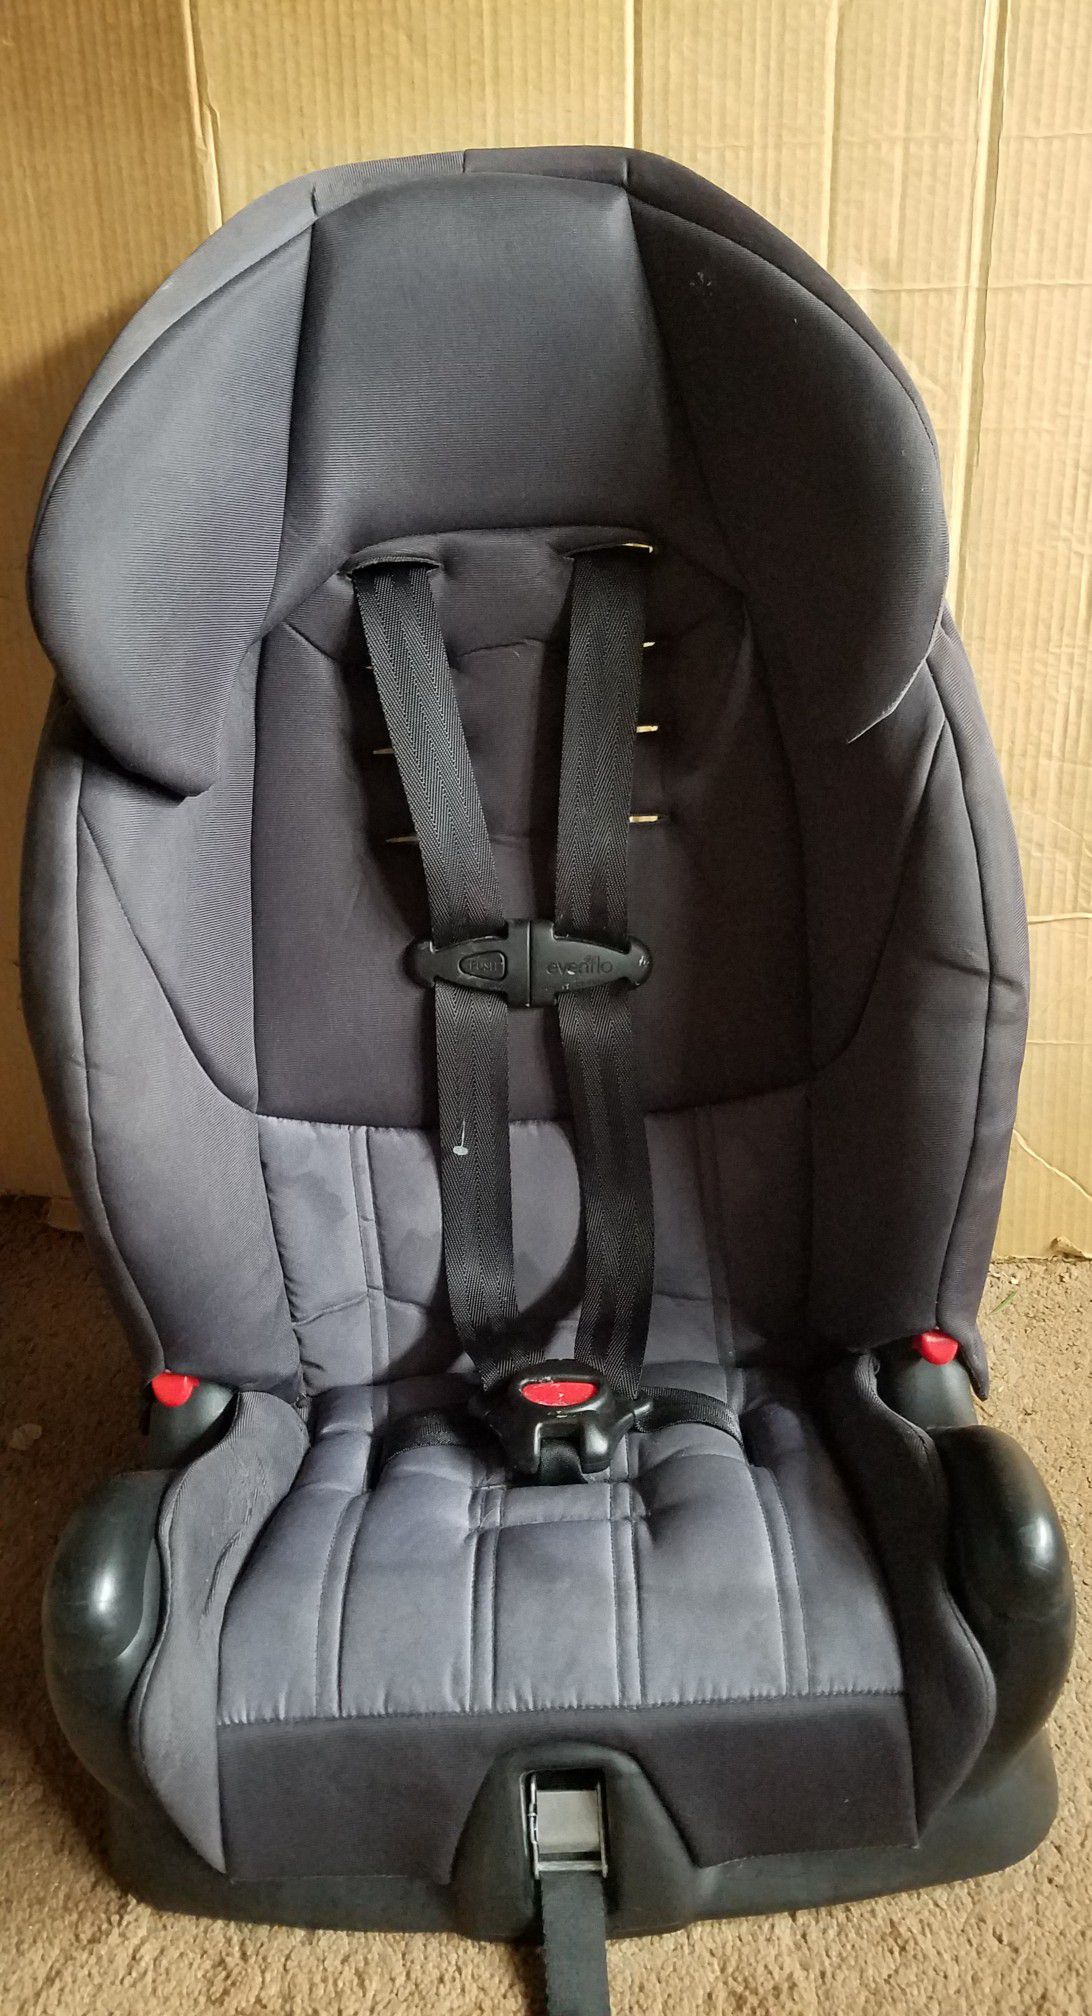 Child booster car seat, 5 pt Evenflo